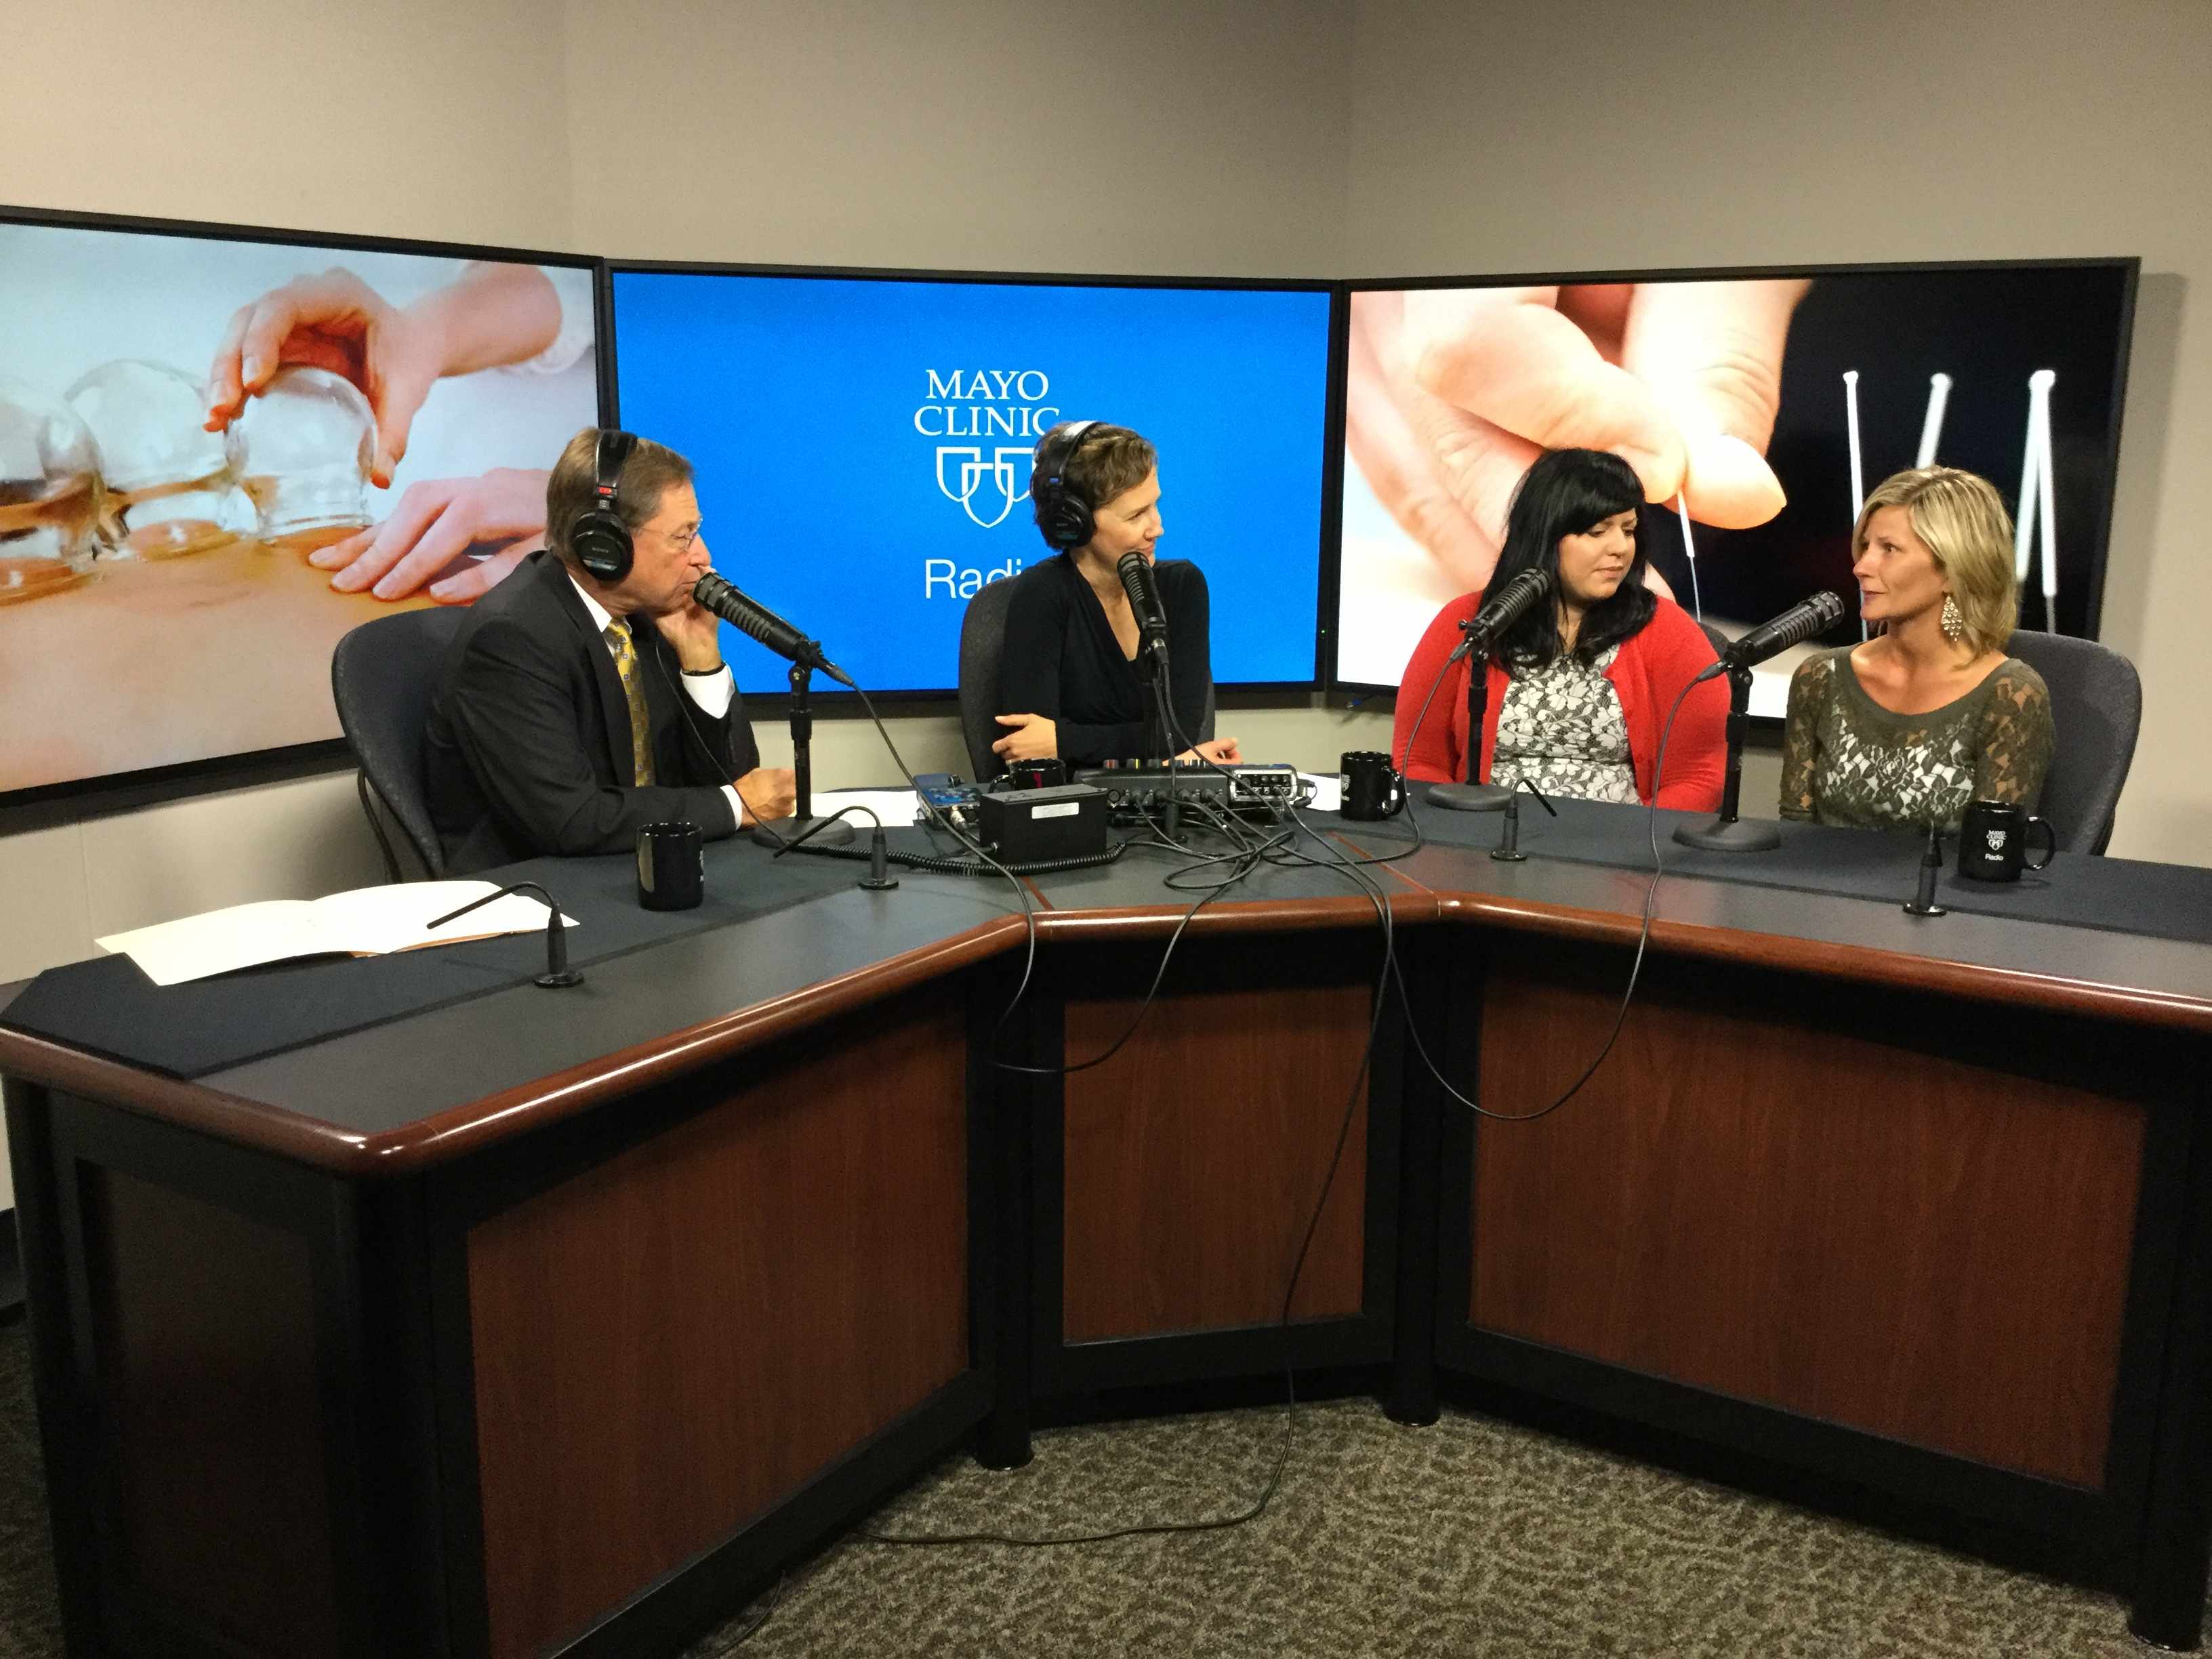 Sara Bublitz and Heather Spaniol being interviewed on Mayo Clinic Radio